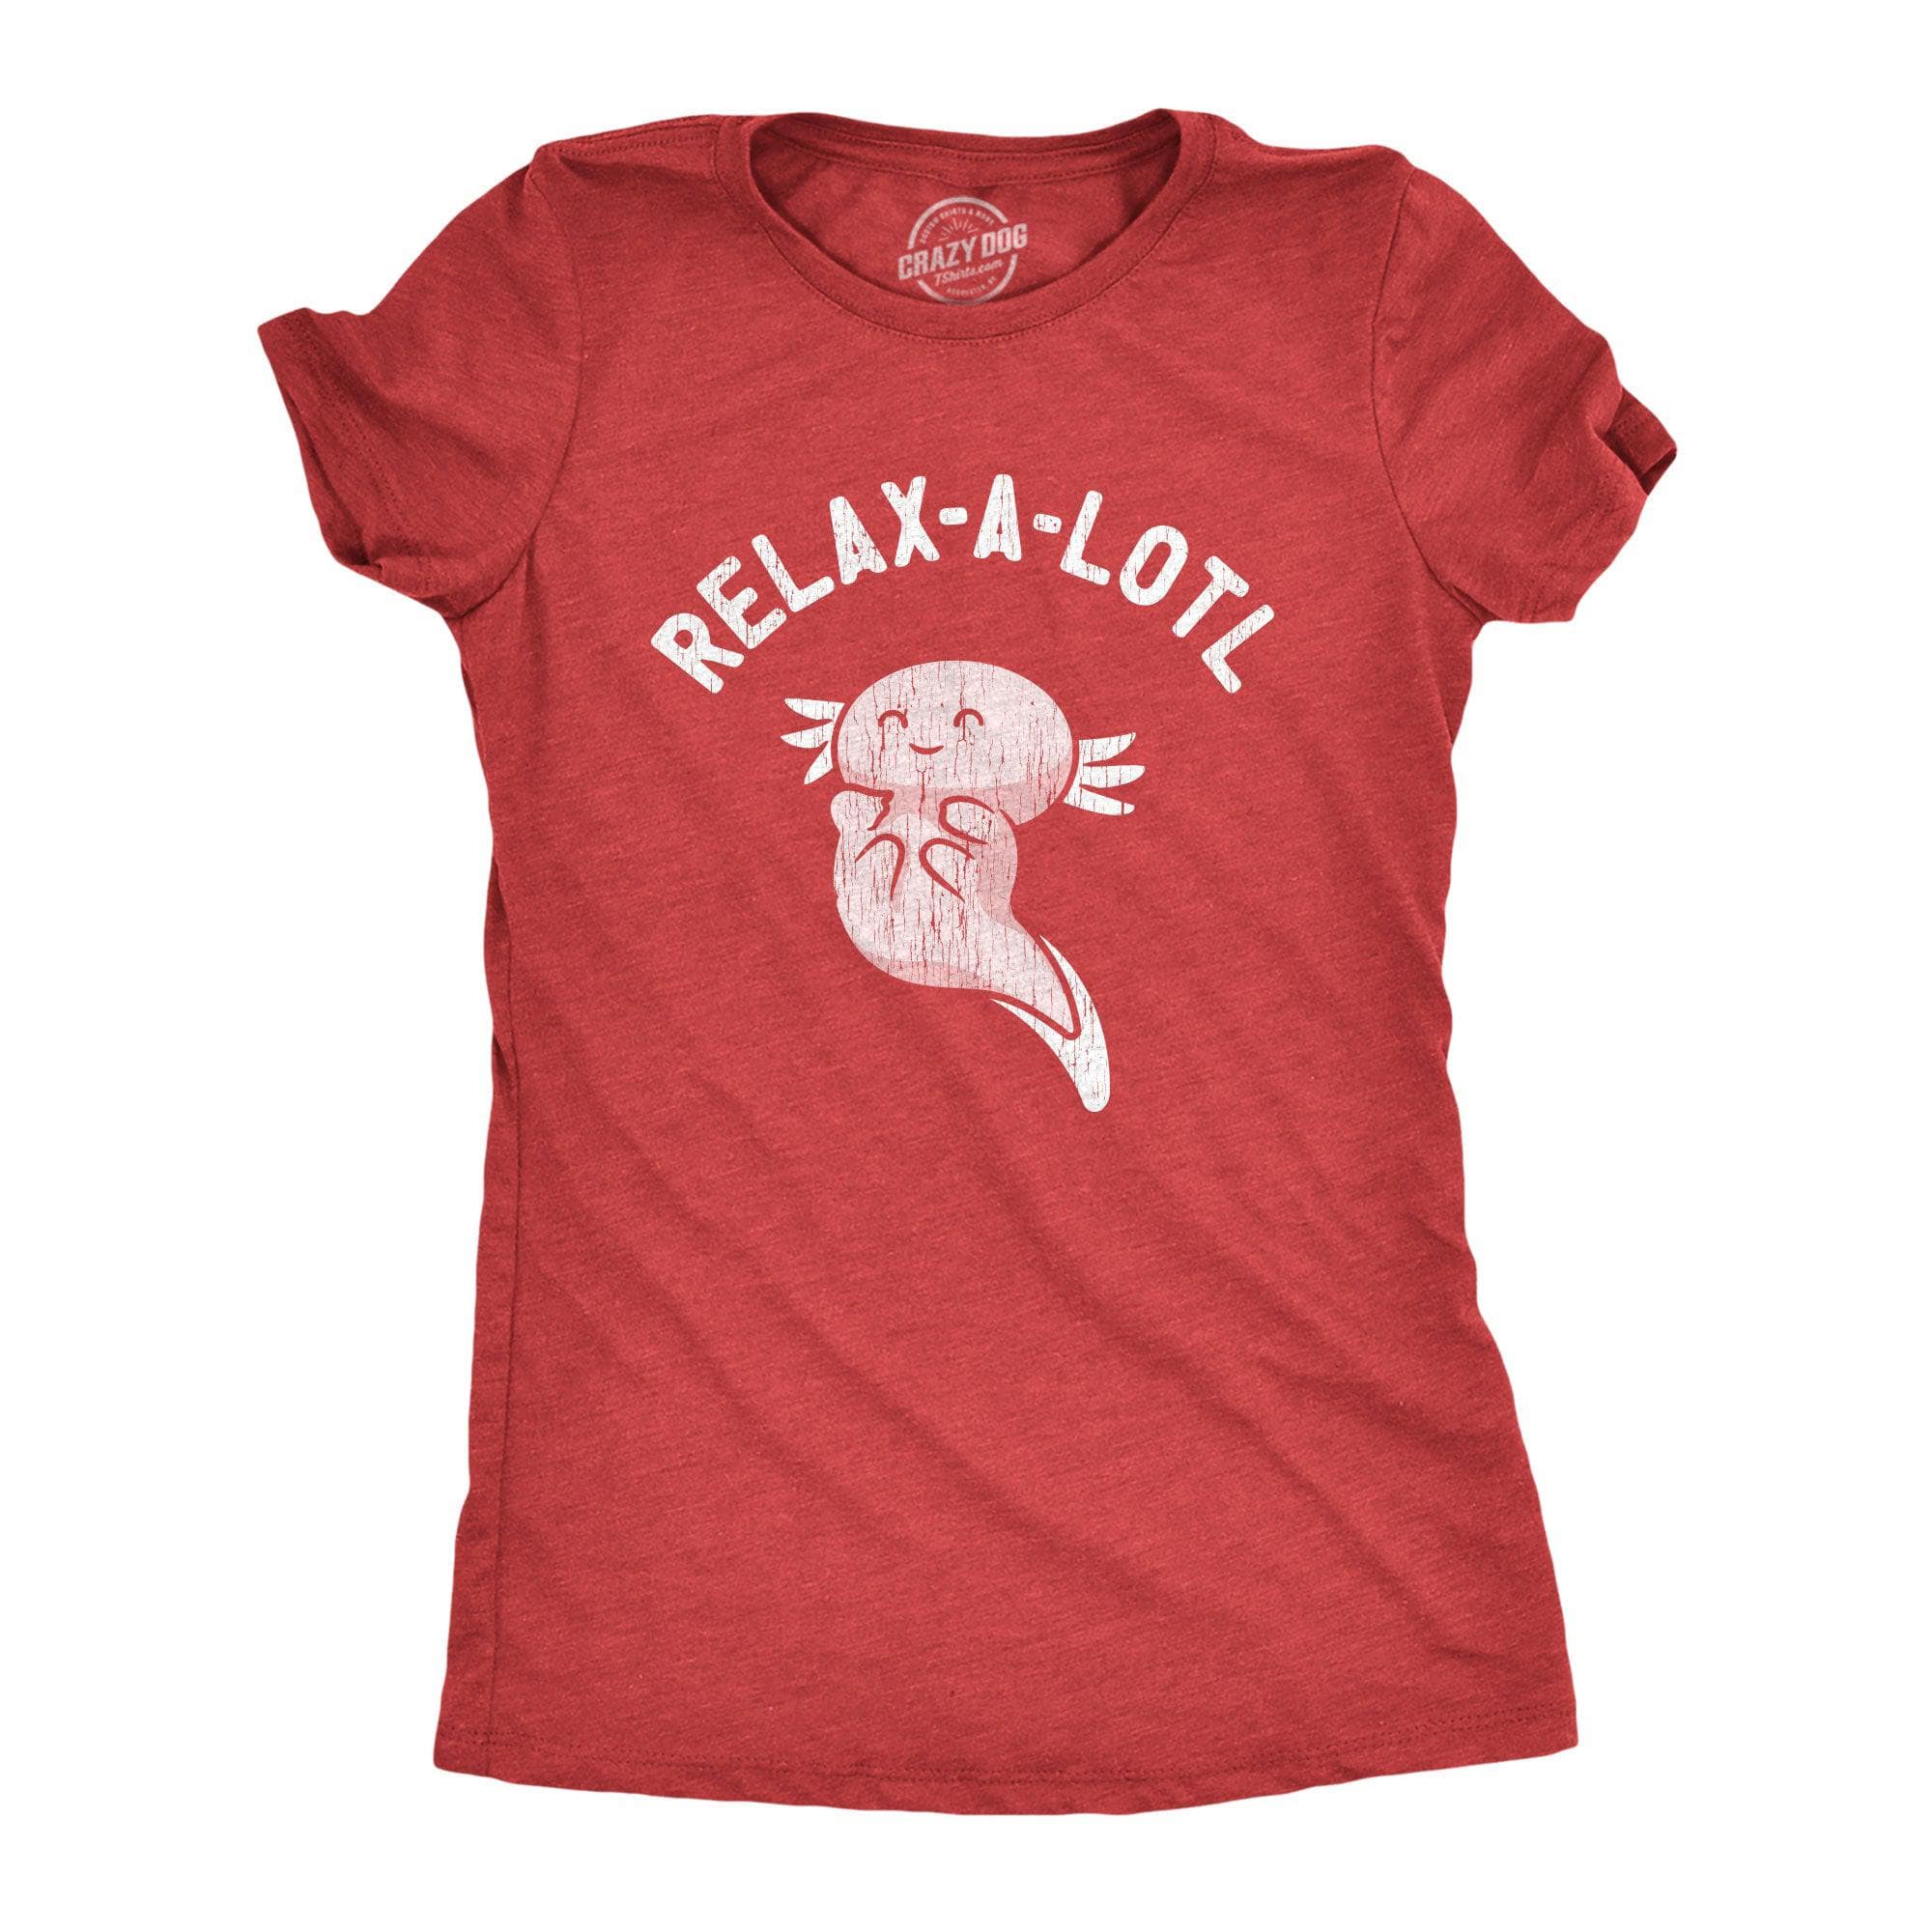 Relax A Lotl Women's Tshirt  -  Crazy Dog T-Shirts